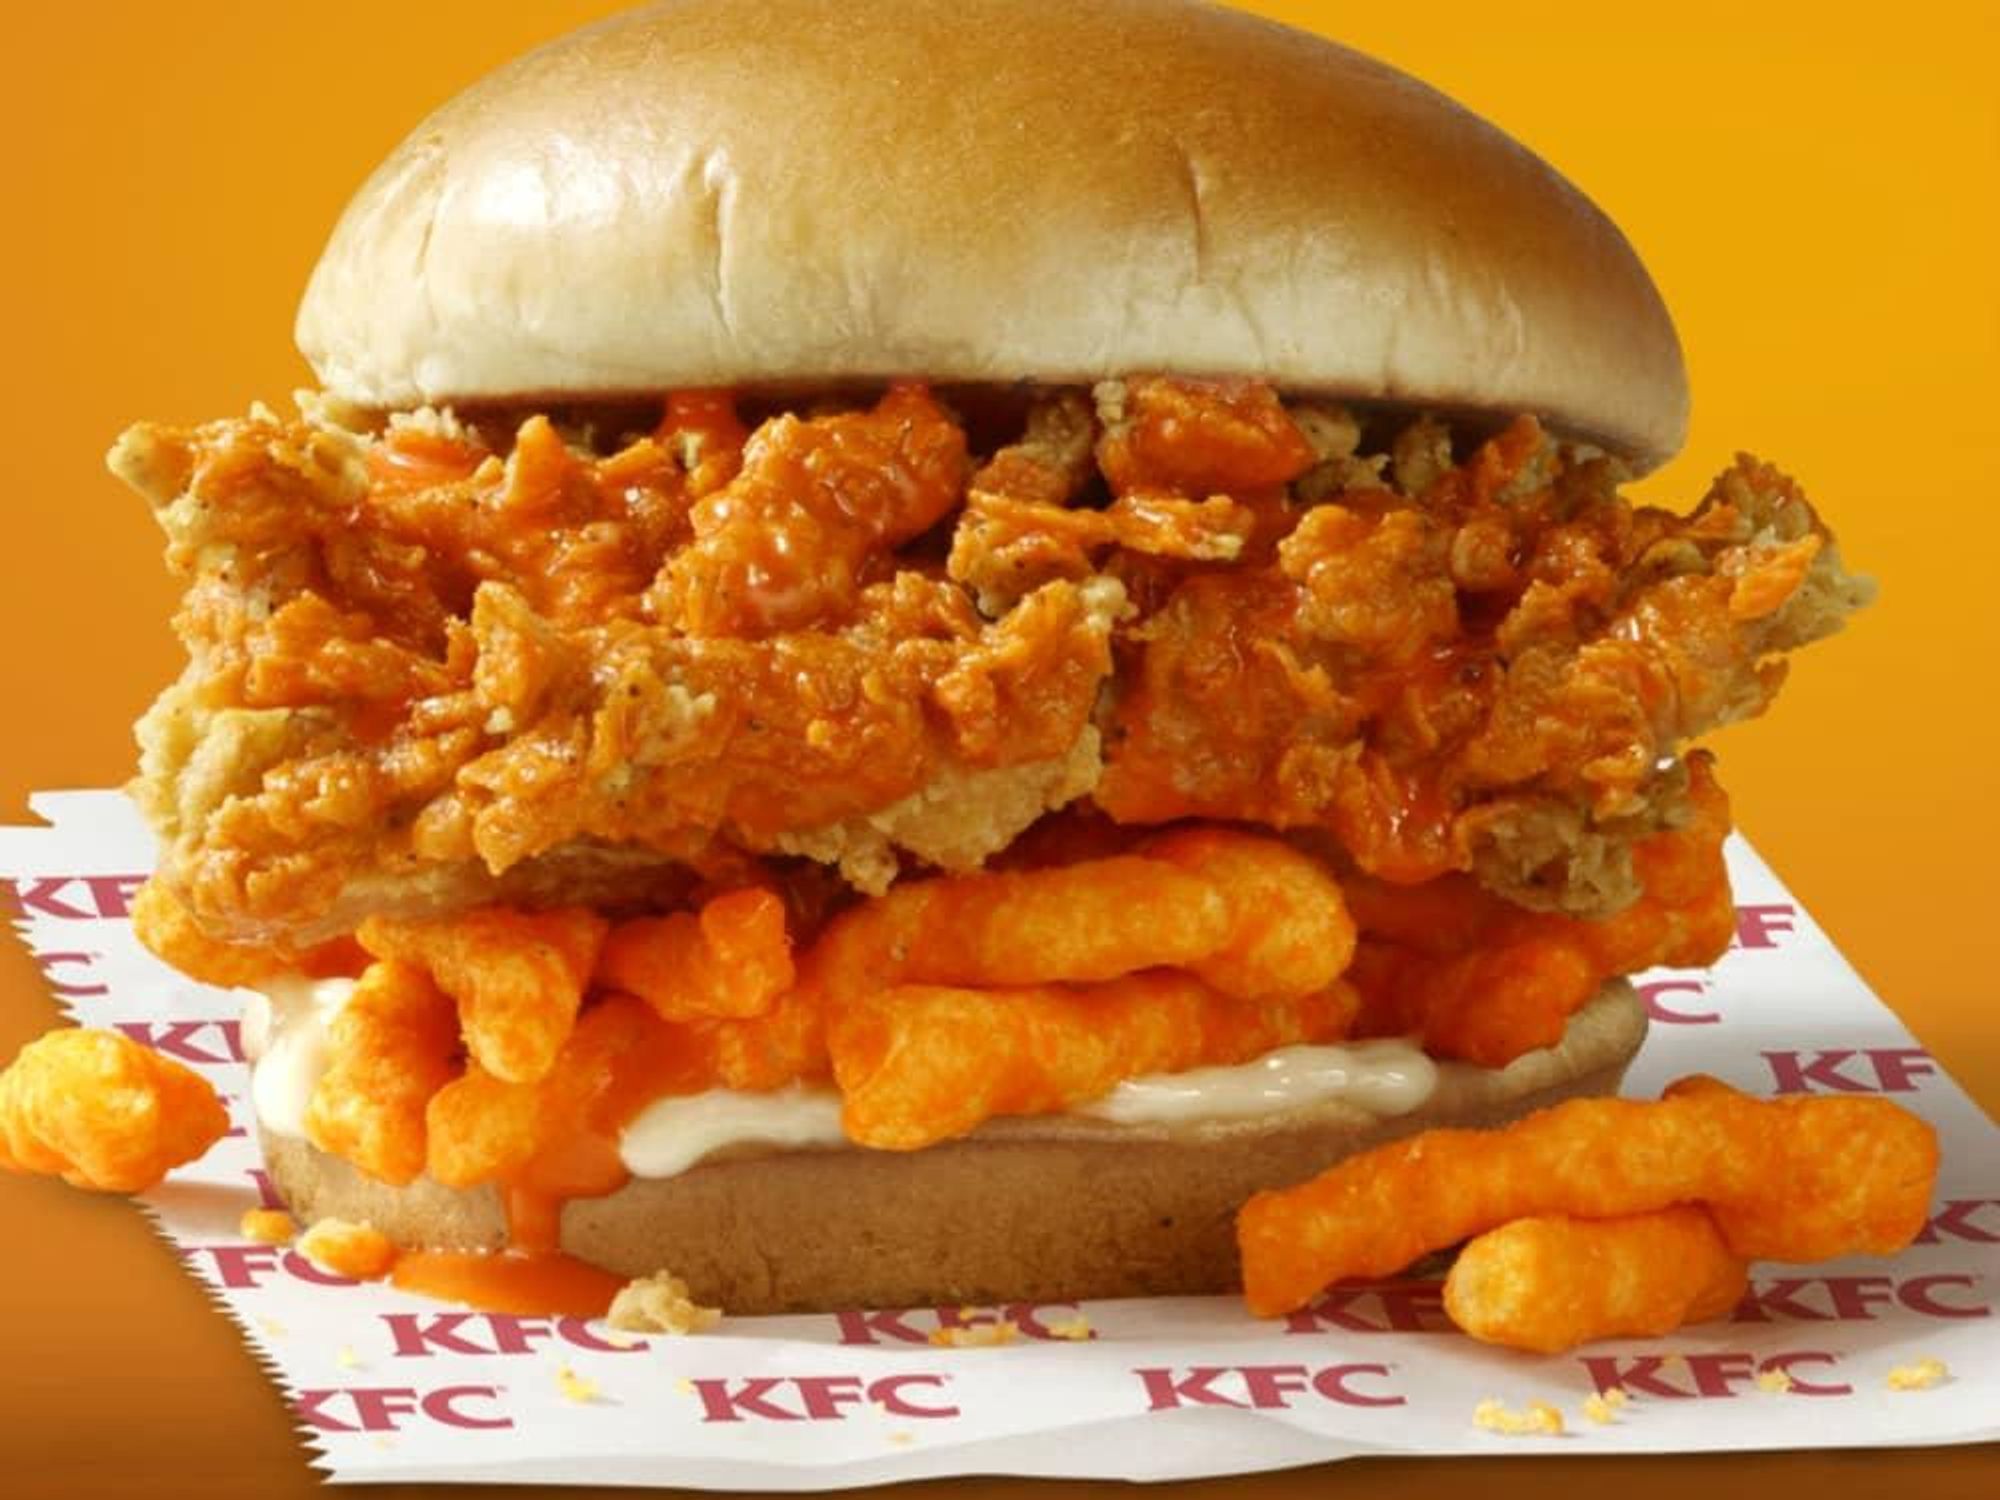 Drive-thru Gourmet - KFC Cheetos sandwich